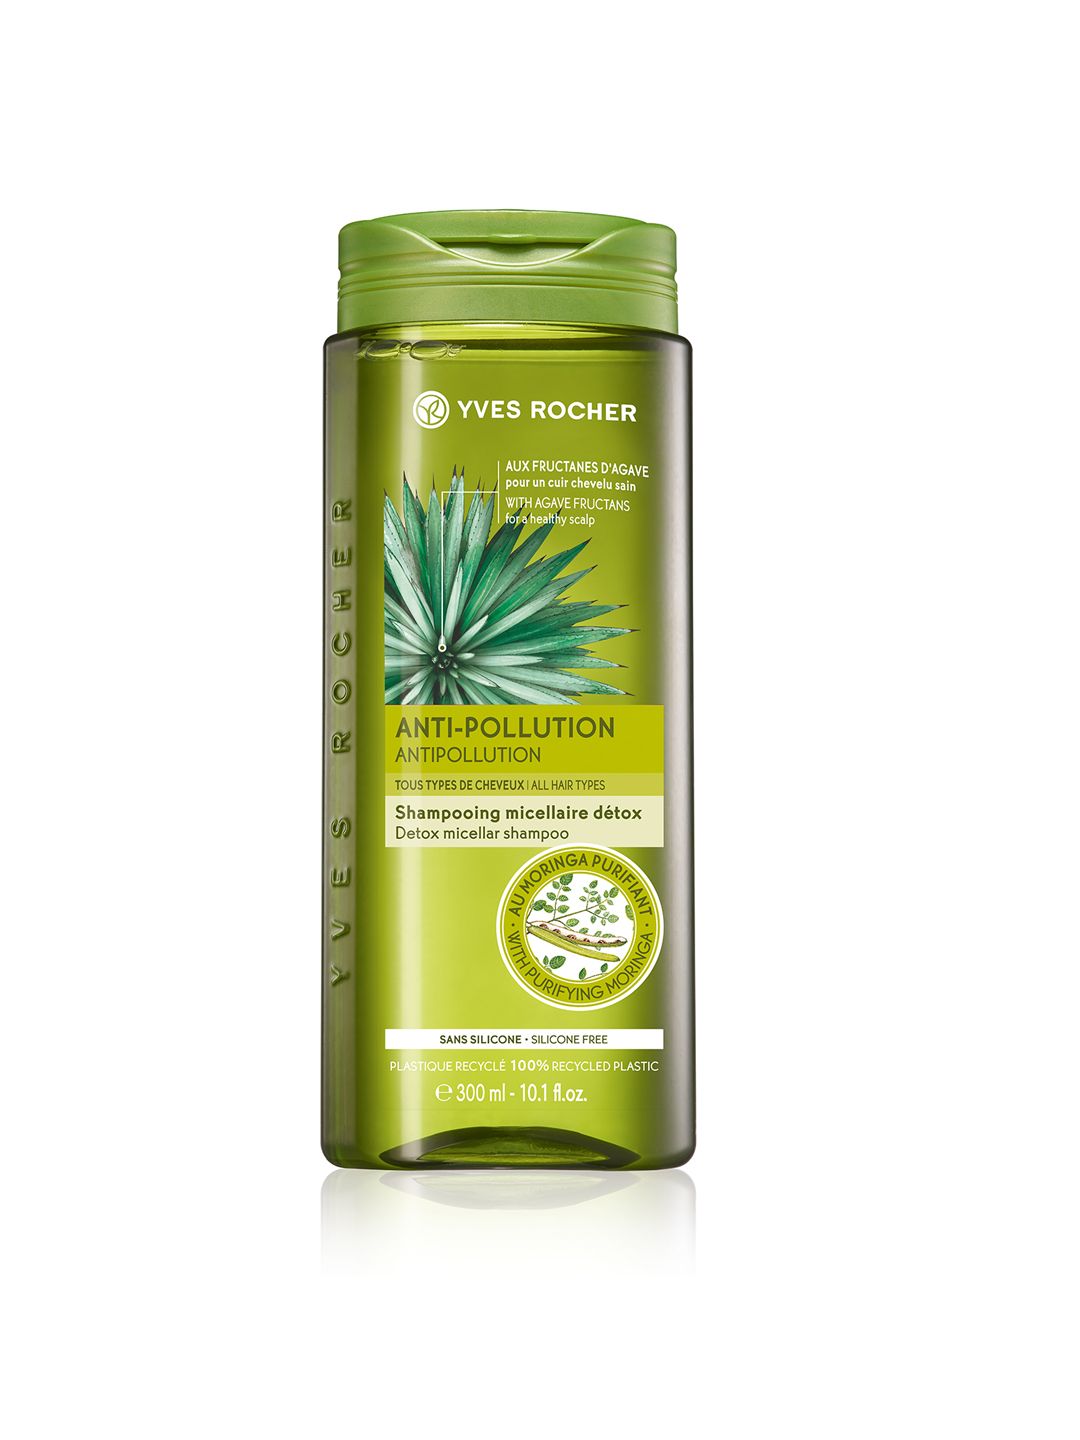 Yves Rocher Anti-Pollution Detox Miscellar Shampoo 300 ml Price in India